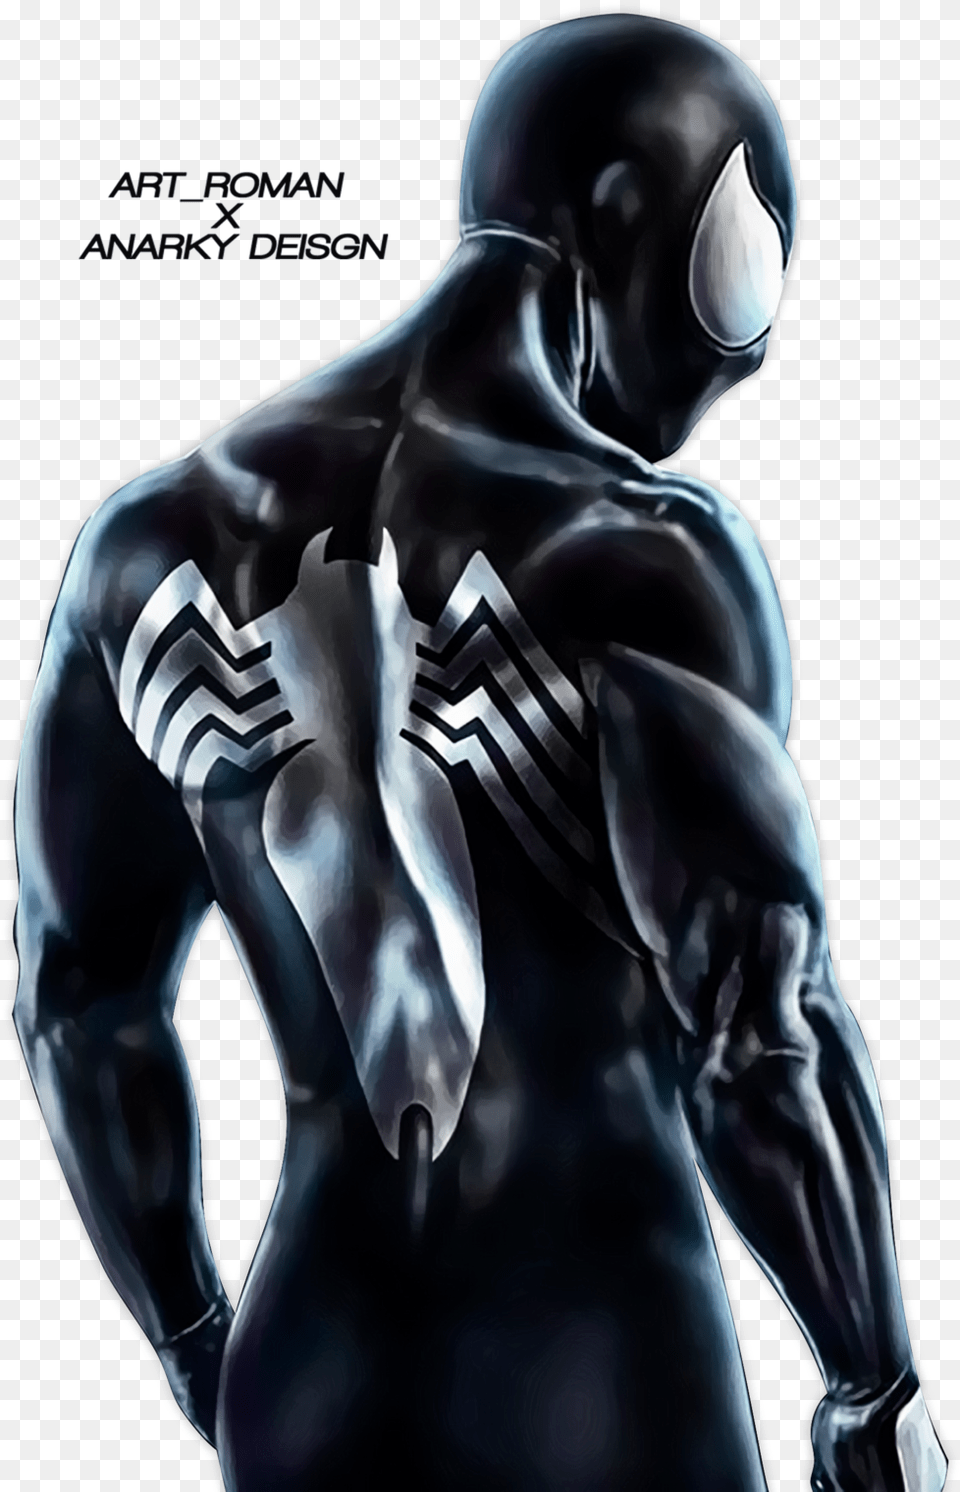 Spiderman Back In Black Spider Man Mcu Black, Body Part, Person, Torso, Adult Png Image